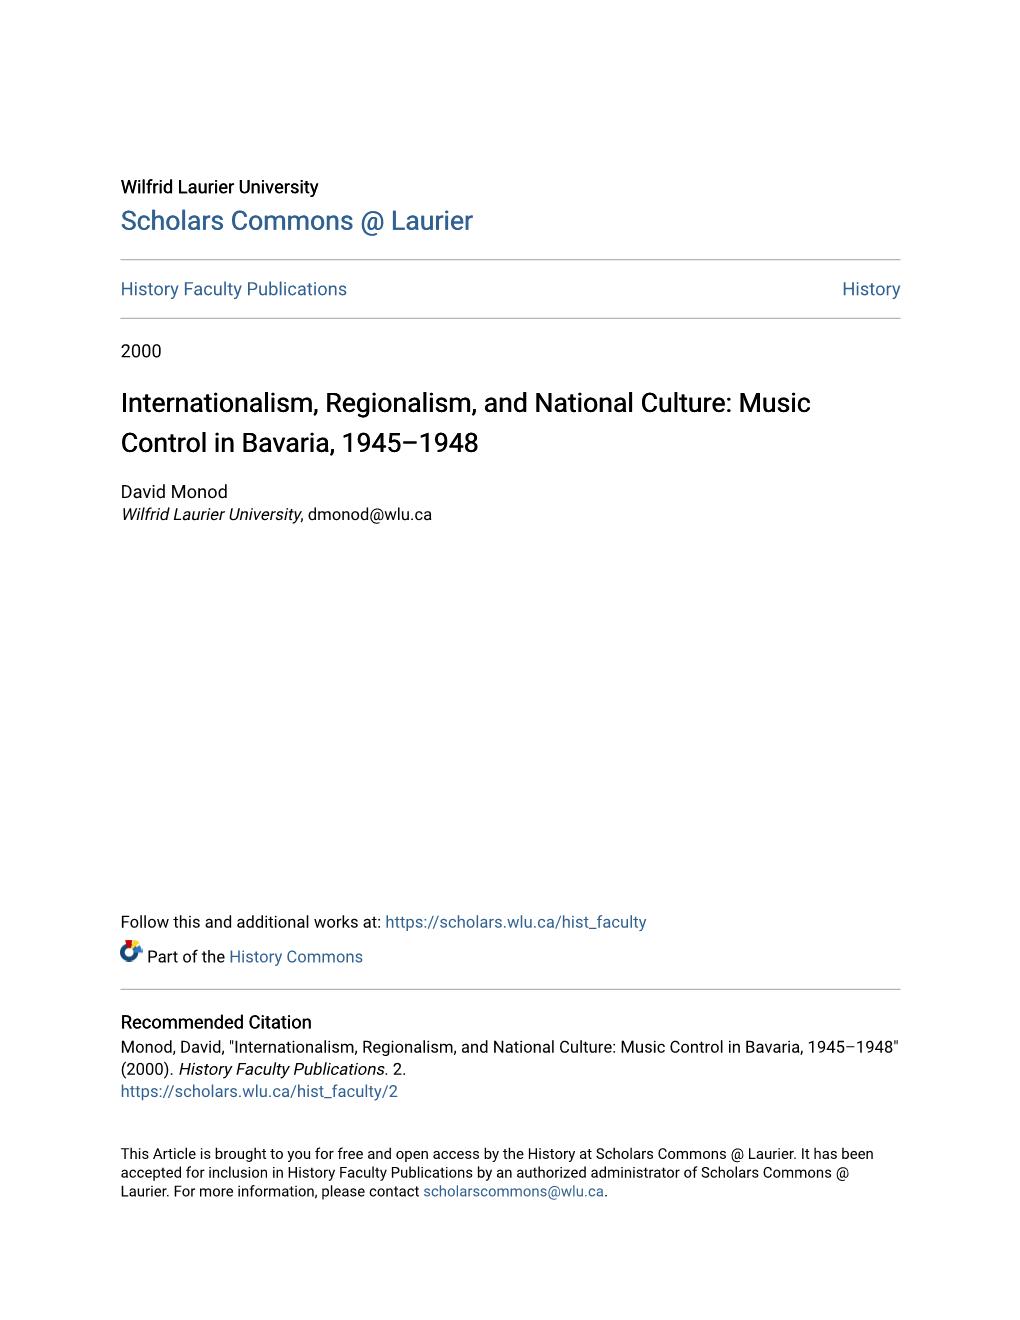 Internationalism, Regionalism, and National Culture: Music Control in Bavaria, 1945–1948